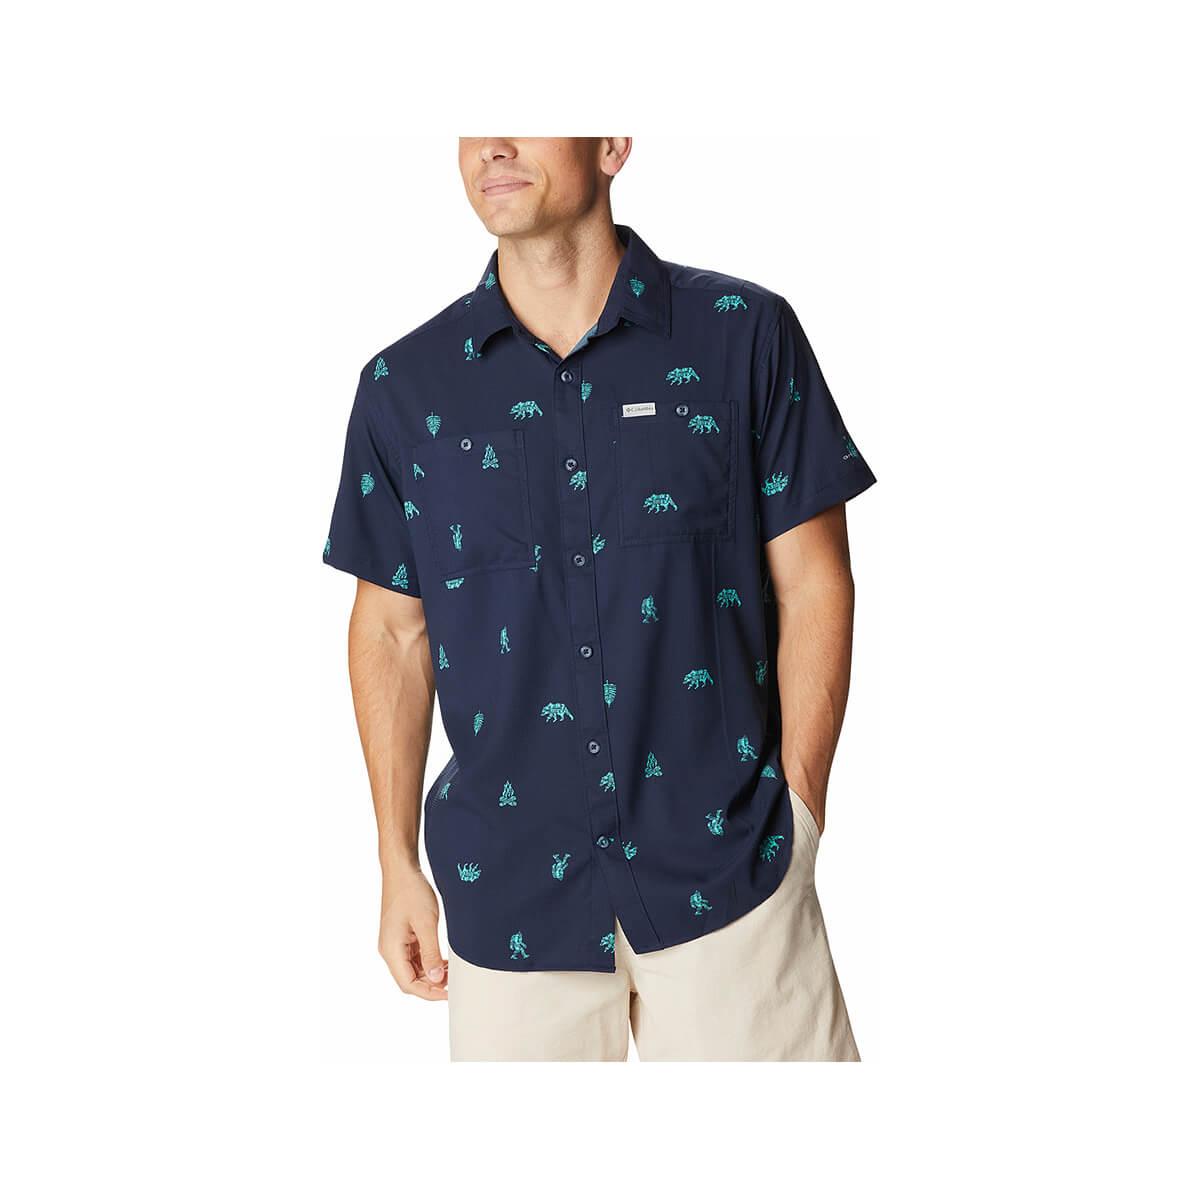  Men's Utilizer Printed Woven Short Sleeve Shirt